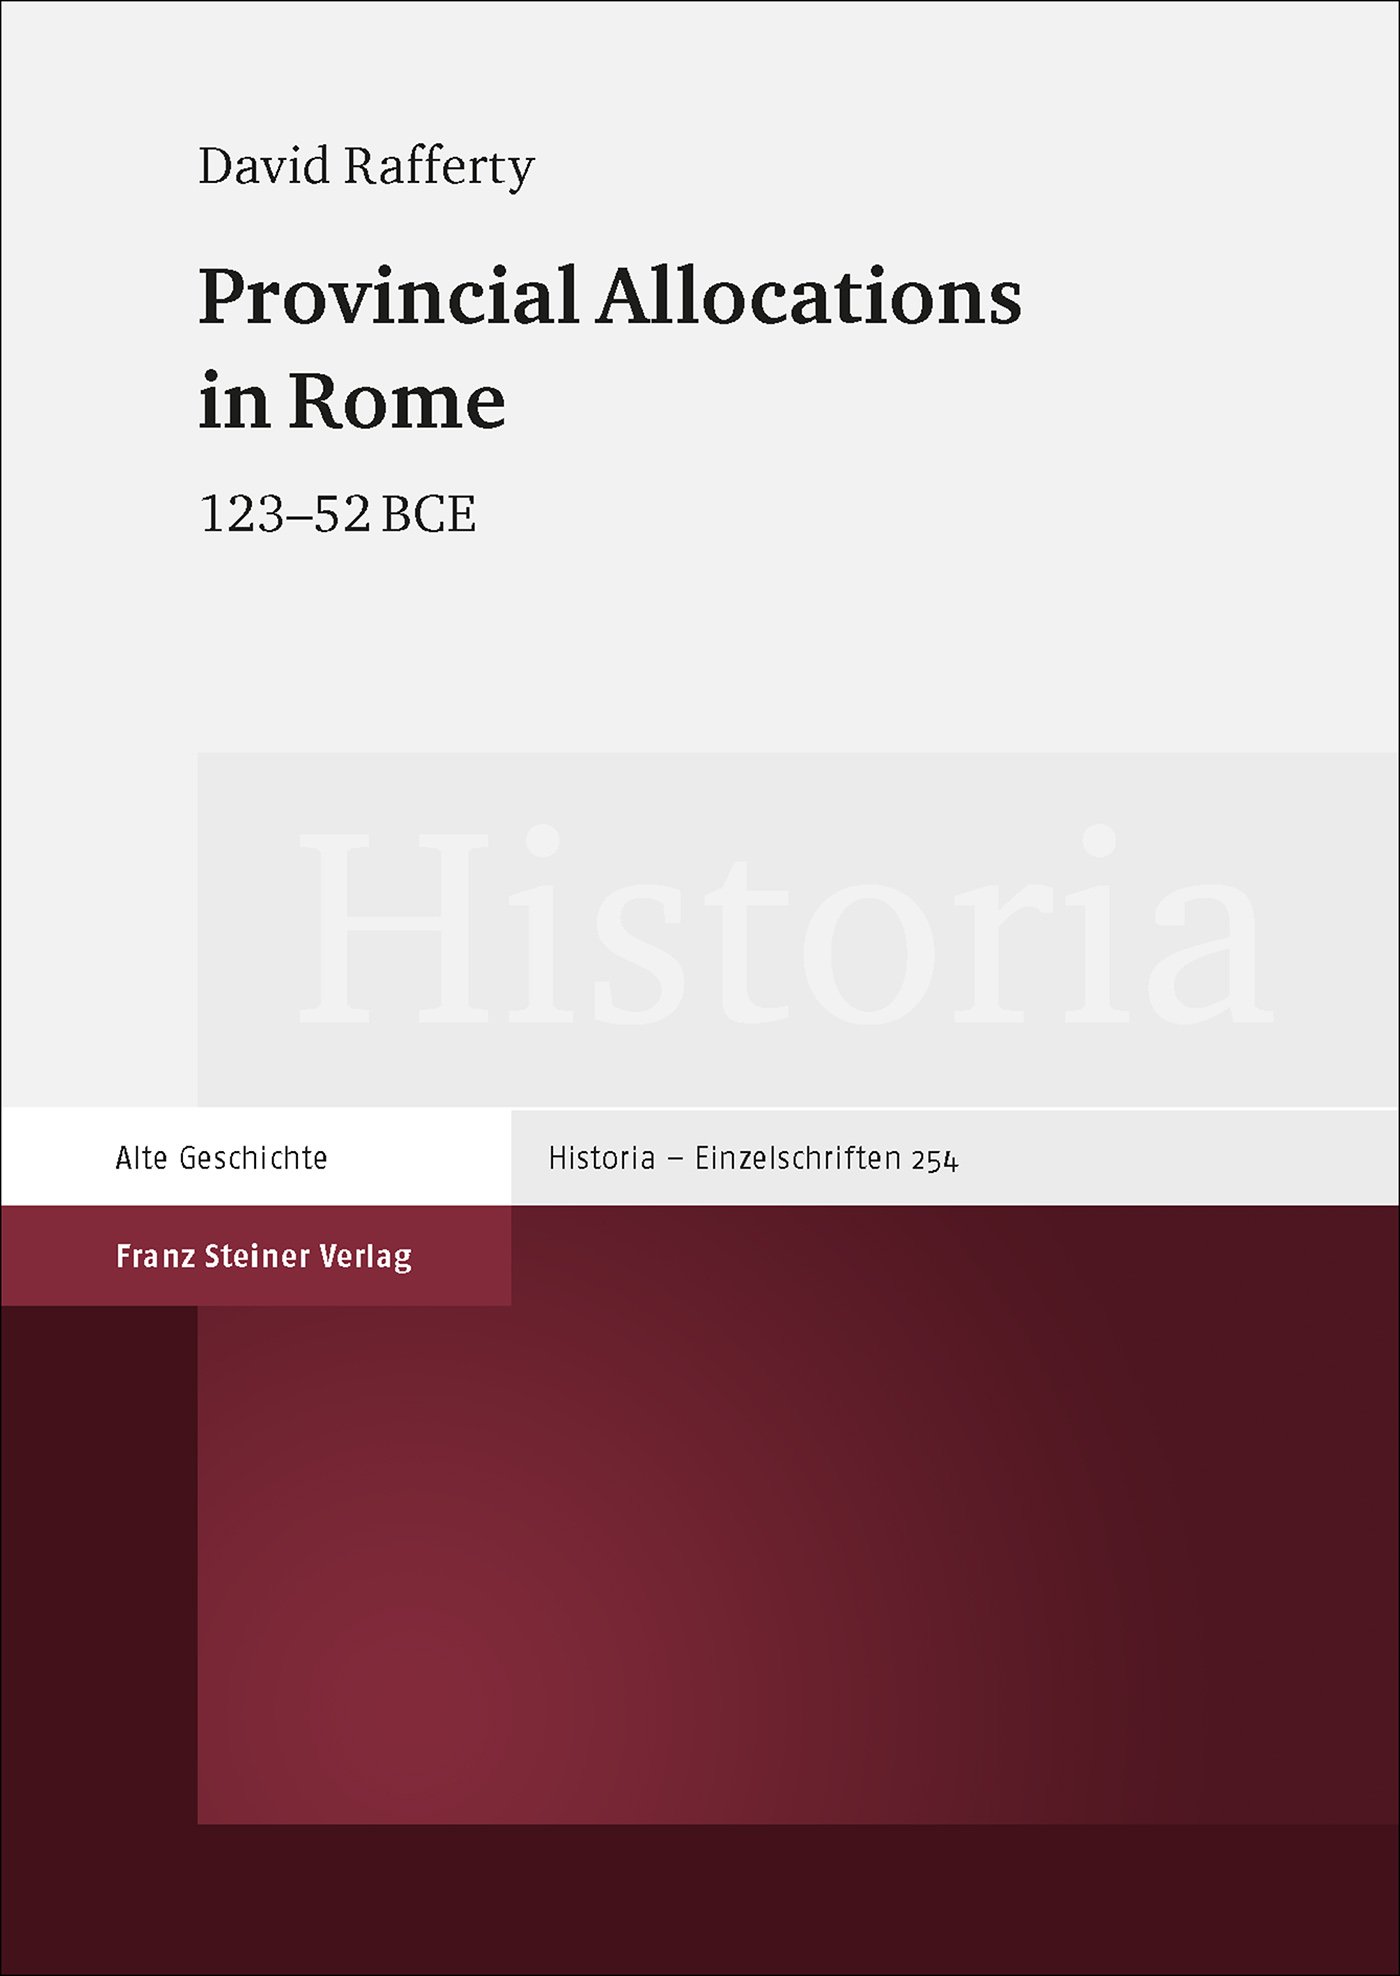 Provincial Allocations in Rome 
